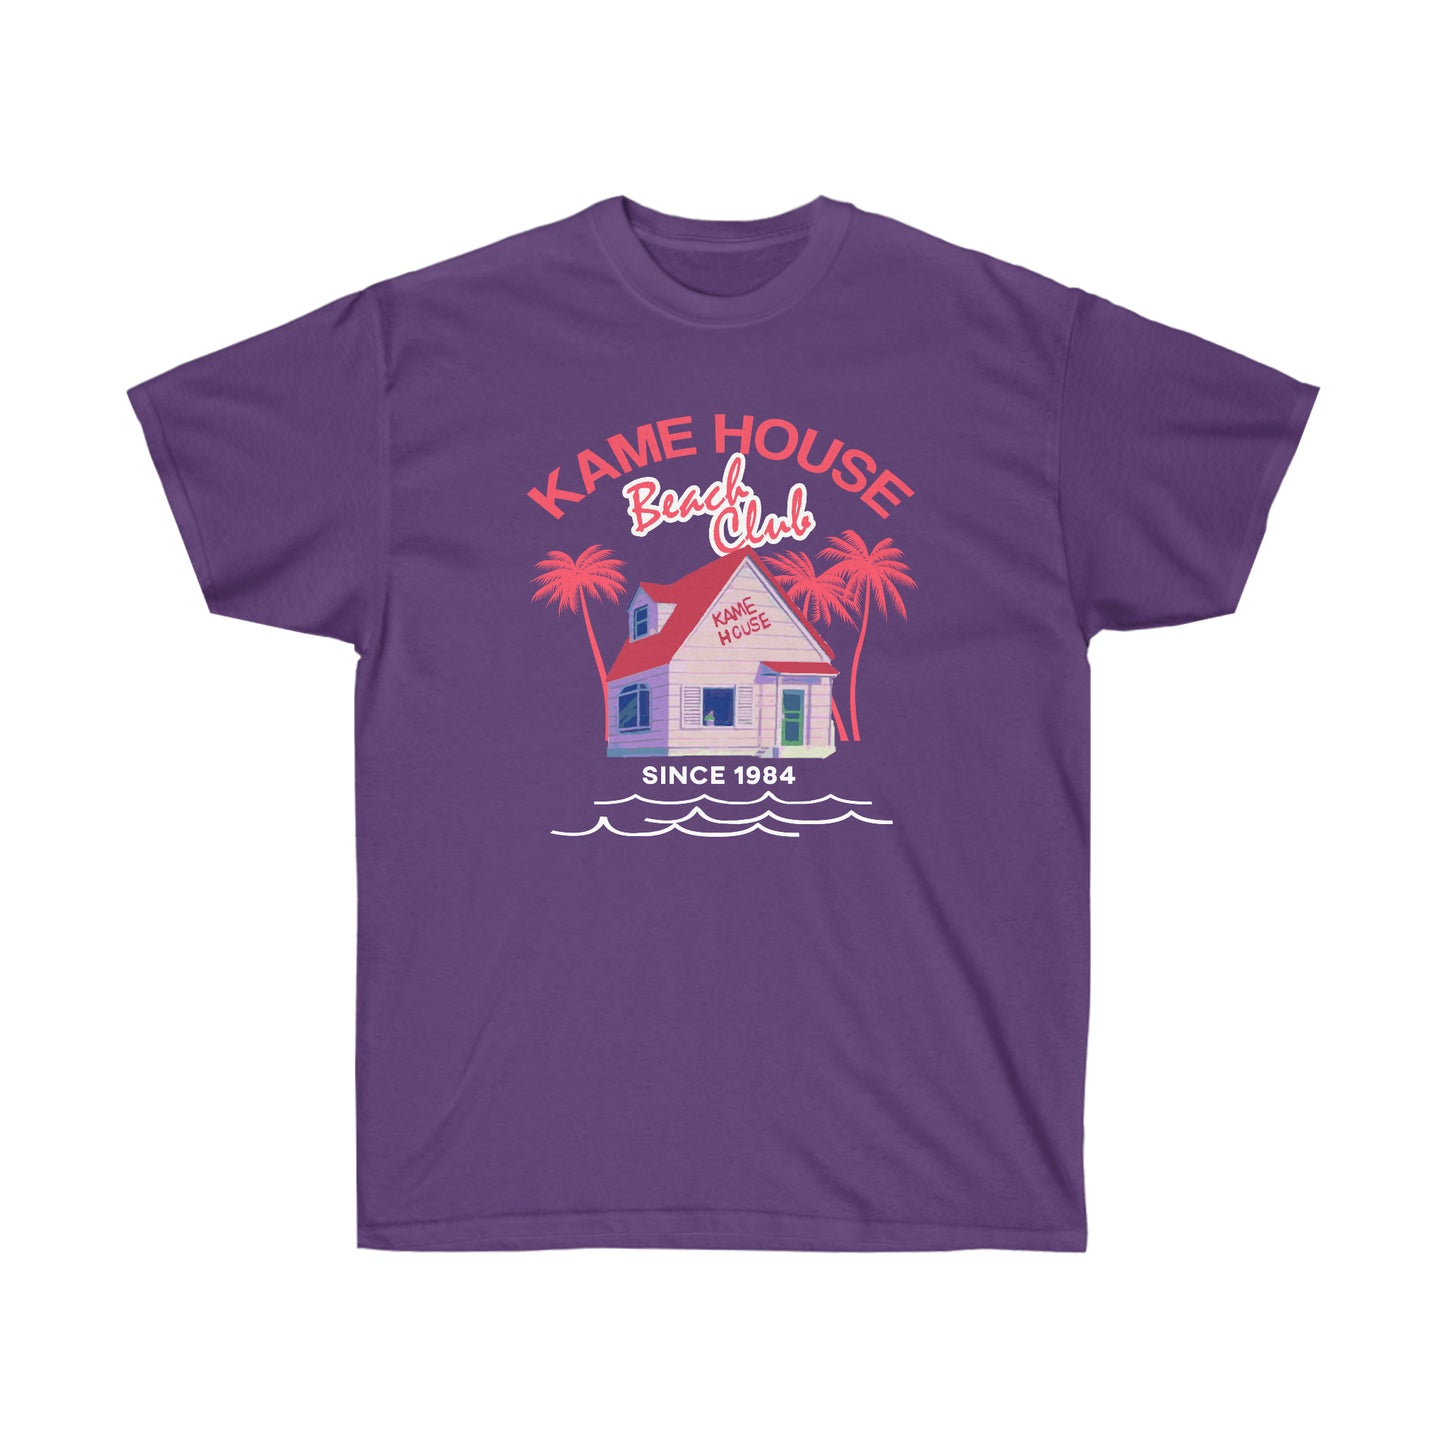 Kame House Beach Club Capsule Corps Logo Classic T-Shirt